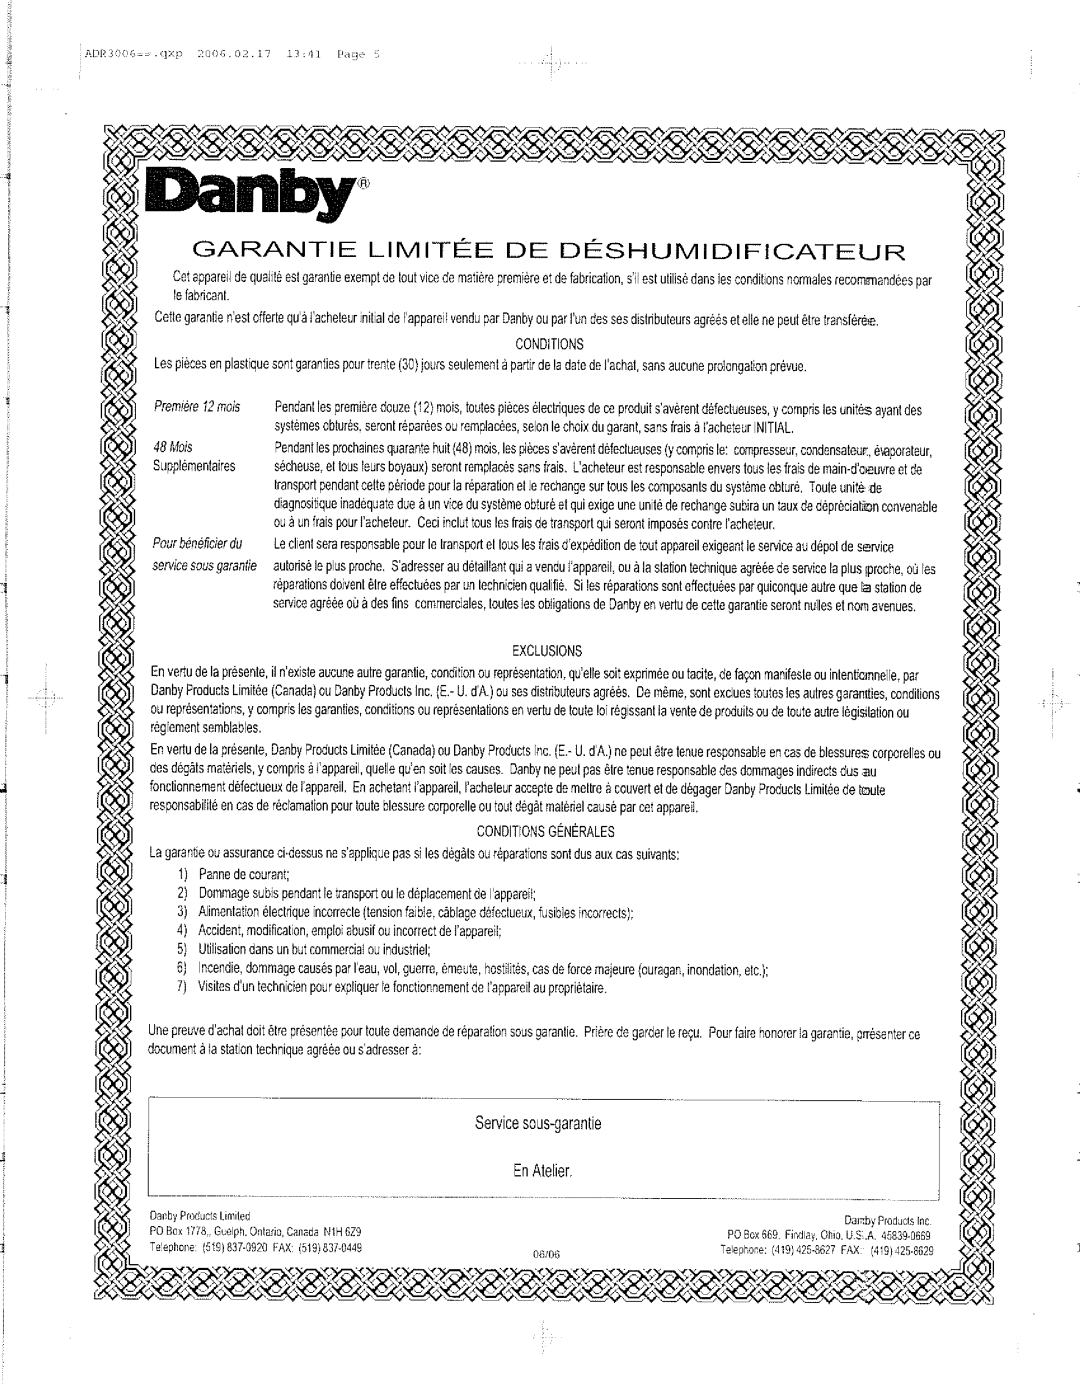 Danby DDR4007EE manual 